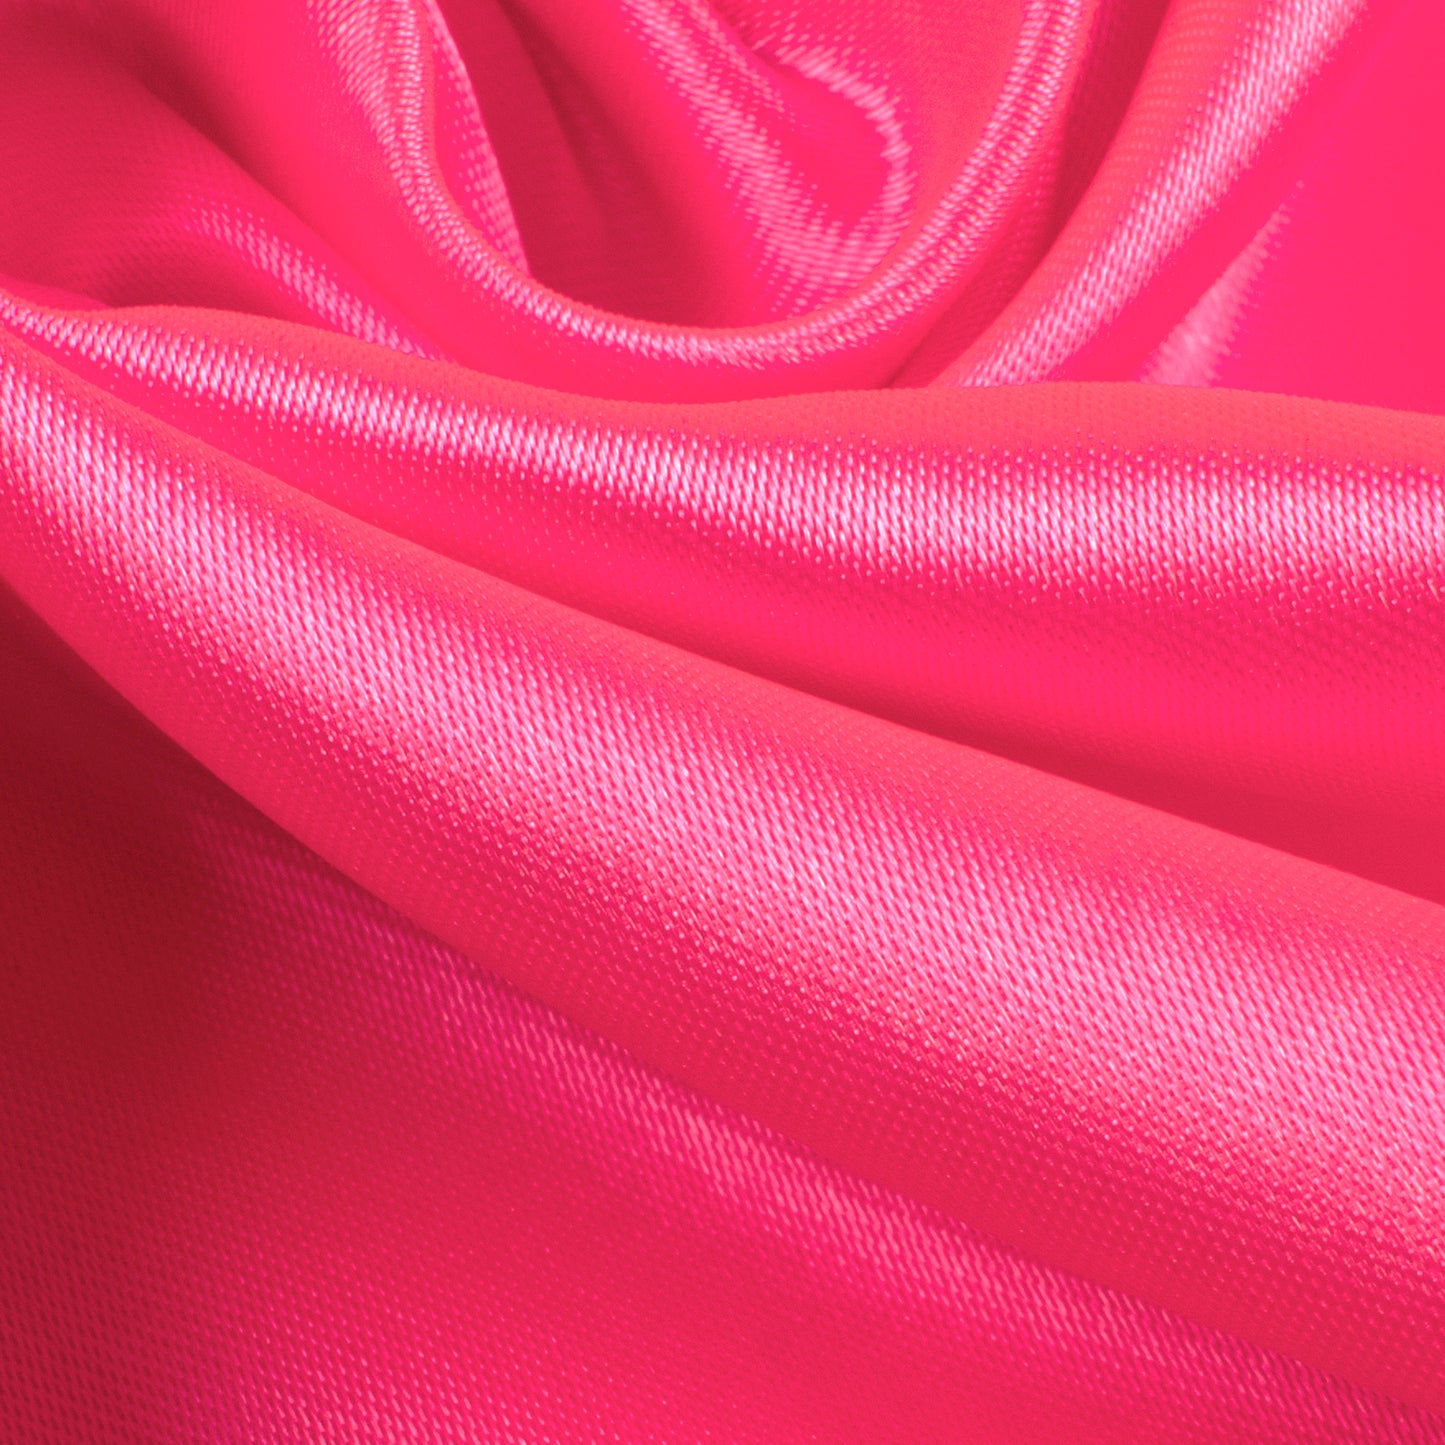 Magenta Pink Plain Neon Ultra Satin Fabric